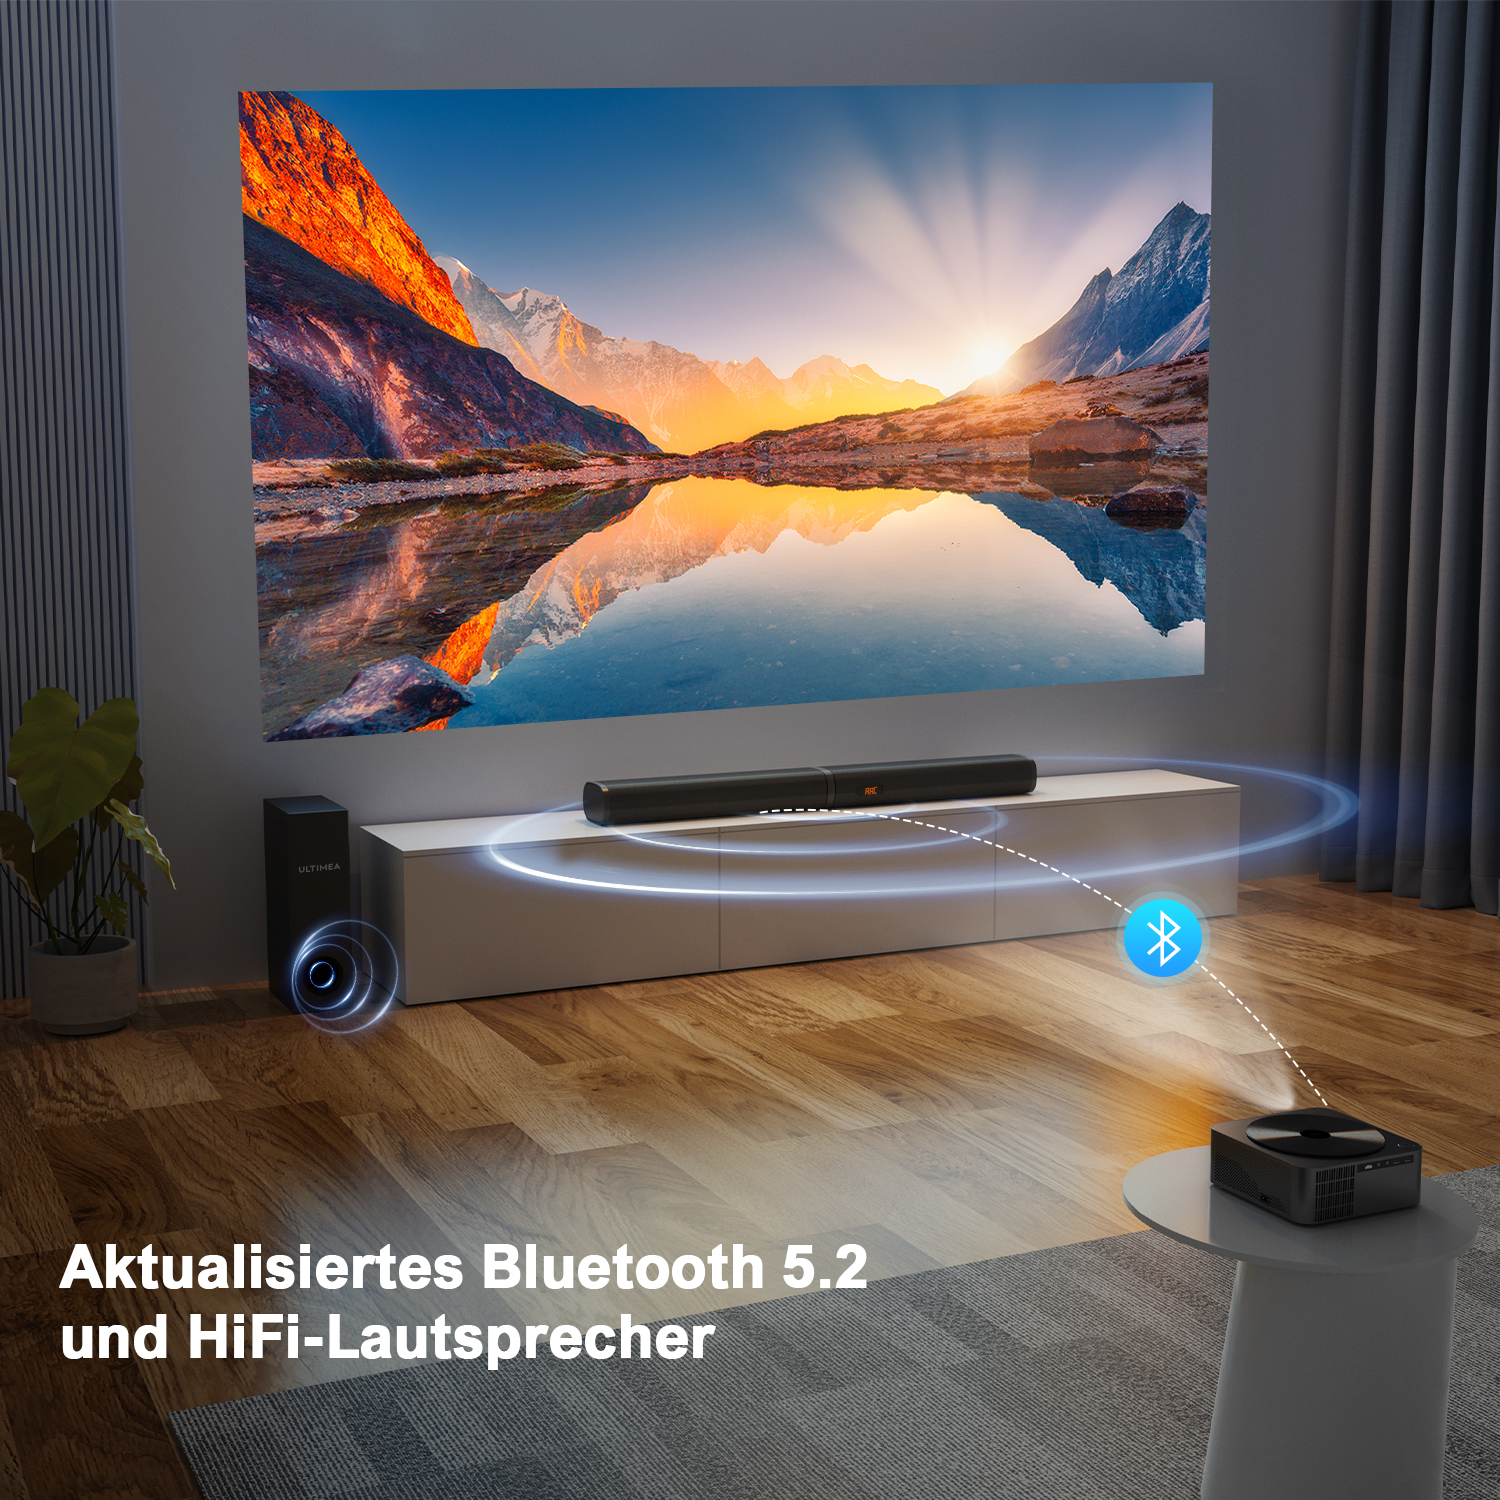 Heimkino-Systeme, Beamer+190W Systeme schwarz) Bluetooth, Speaker Soundbar Full HD 1080P P40 Heimkino ULTIMEA